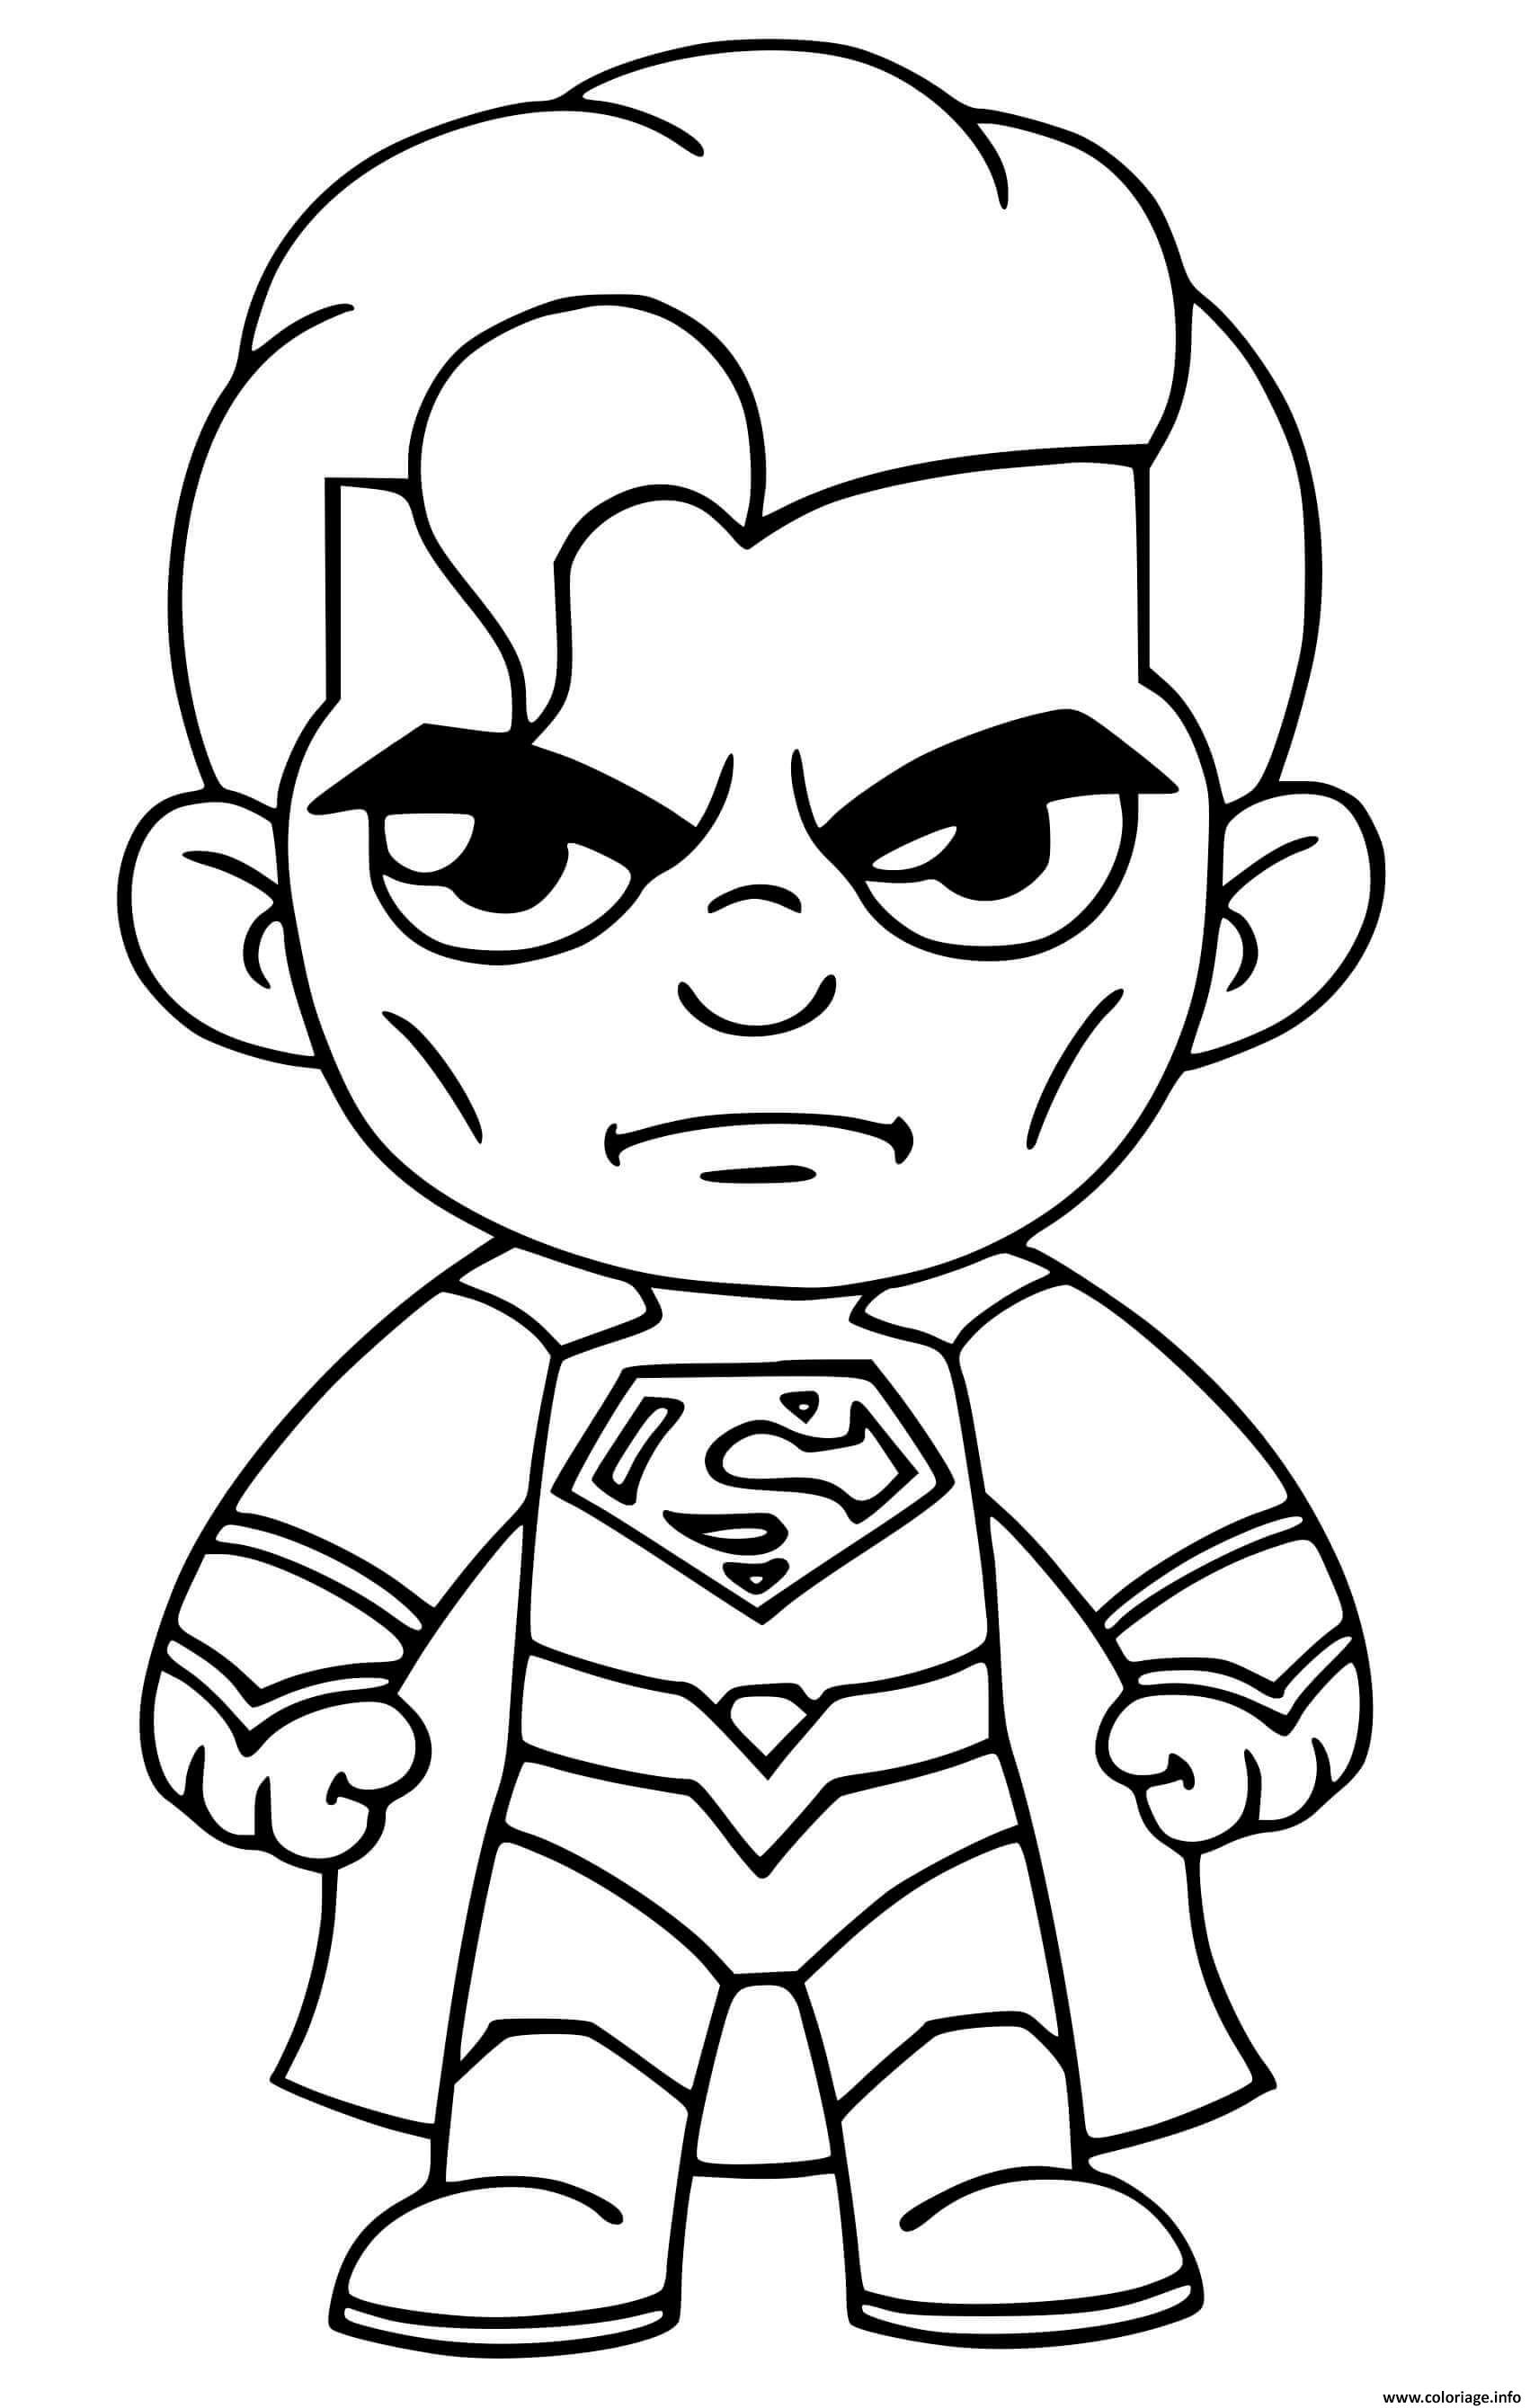 Dessin superman fortnite secret skin Coloriage Gratuit à Imprimer